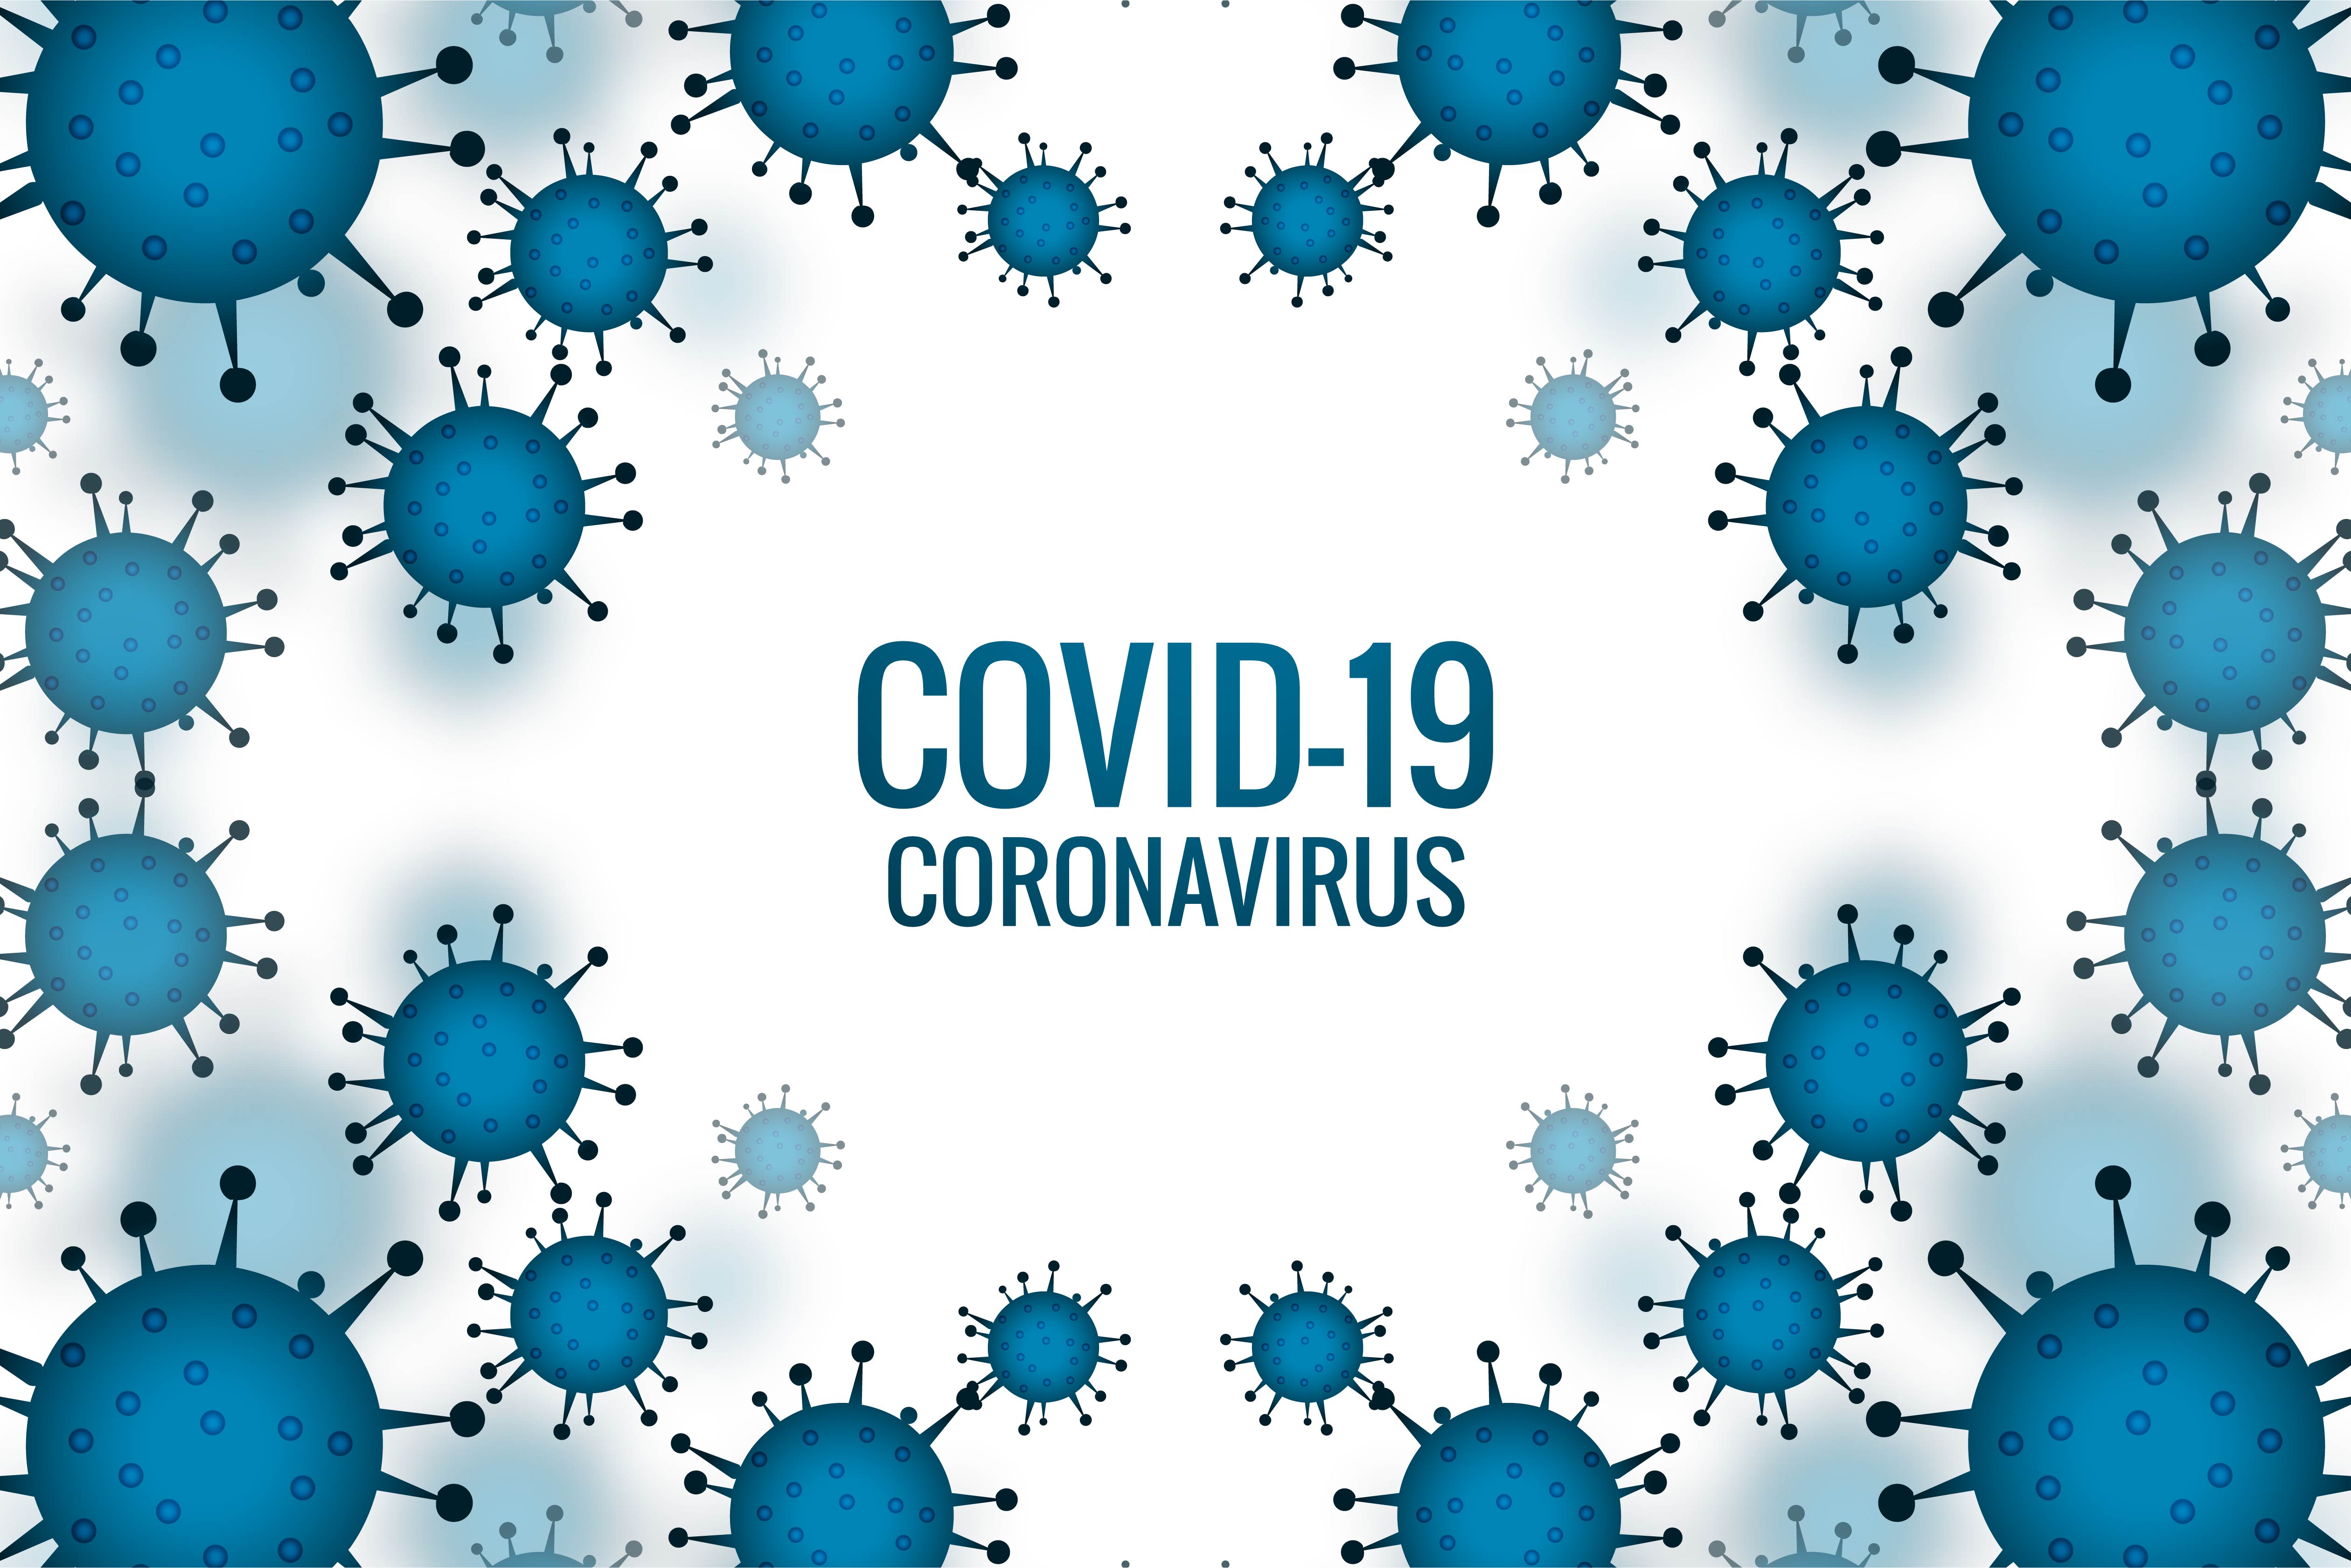 vecteezy_covid-19-coronavirus-blue-outbreak-design_1233331